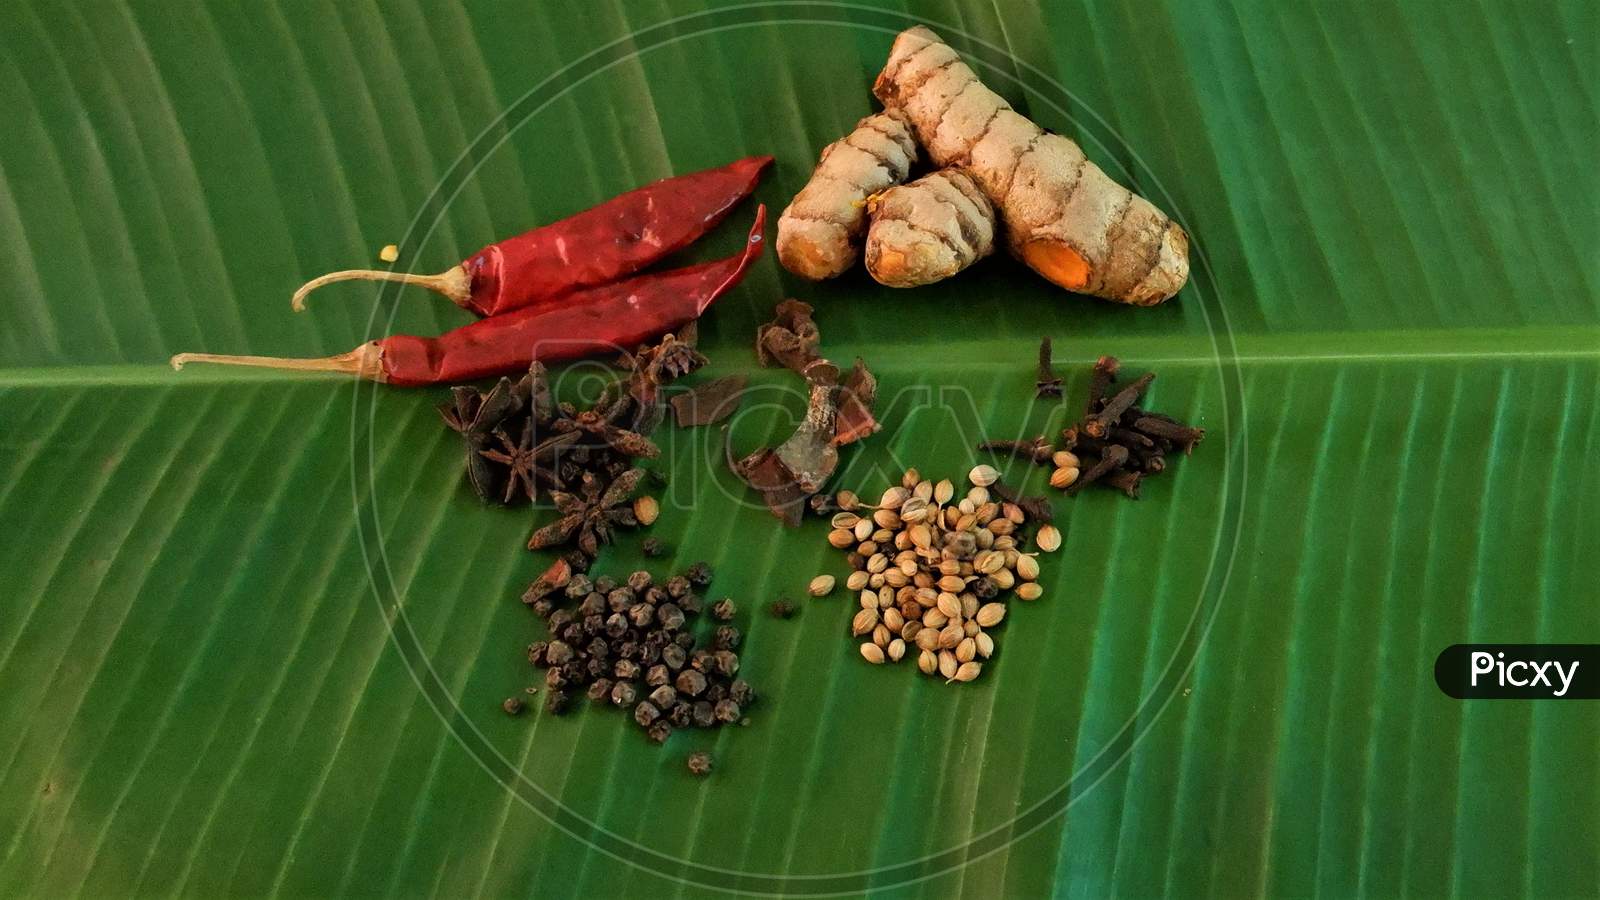 indian kerala masala spices on banana leaf